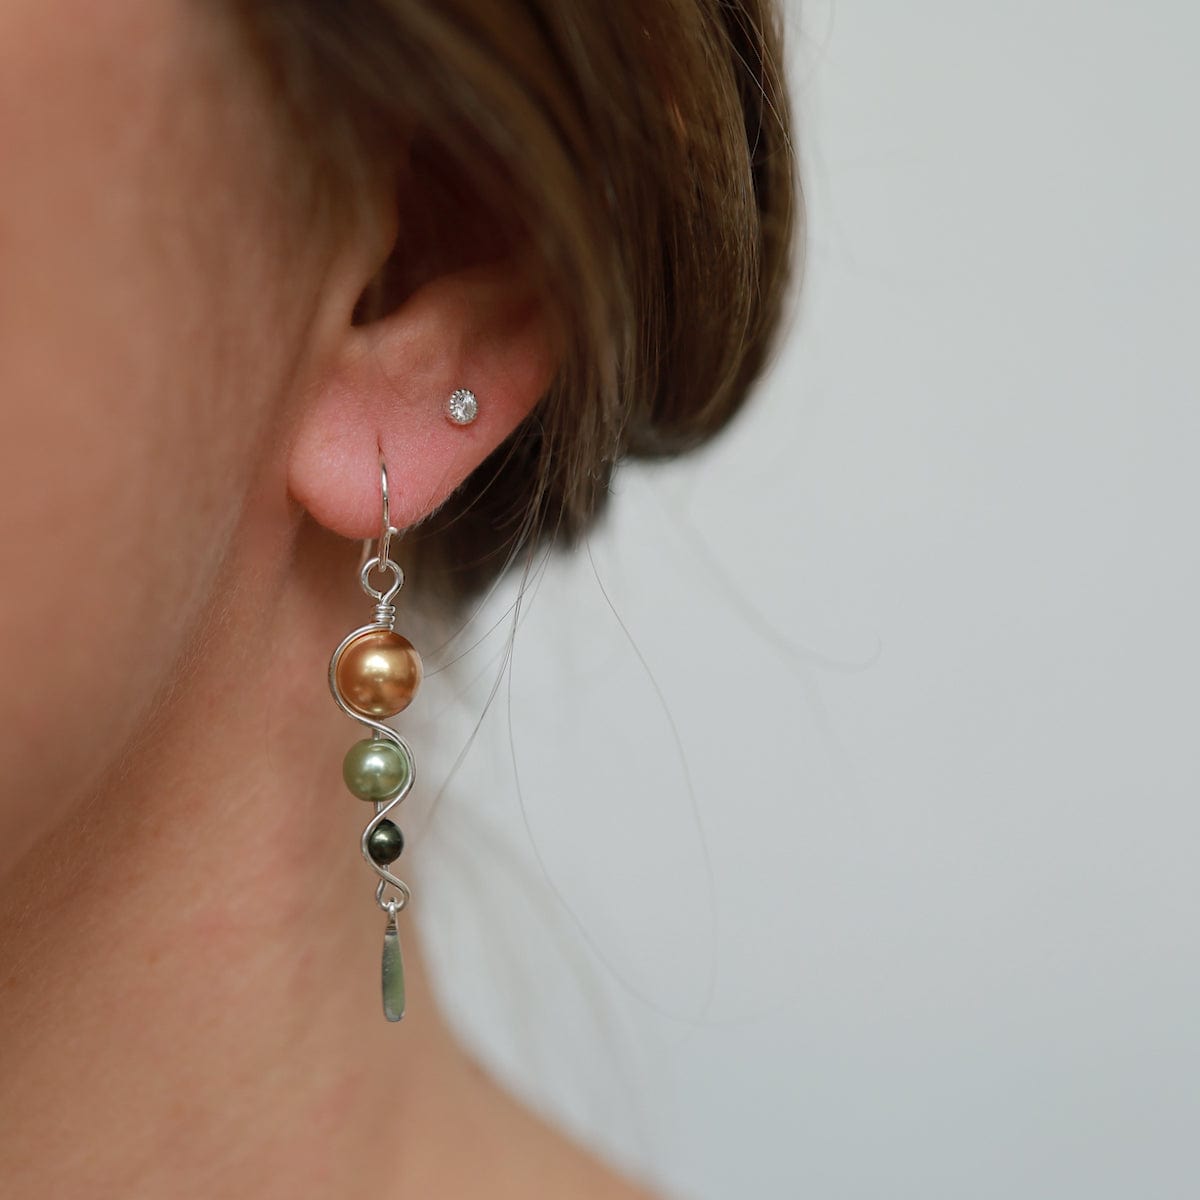 EAR One Long Climb Green & Gold Pearl Earring - Sterling Silver